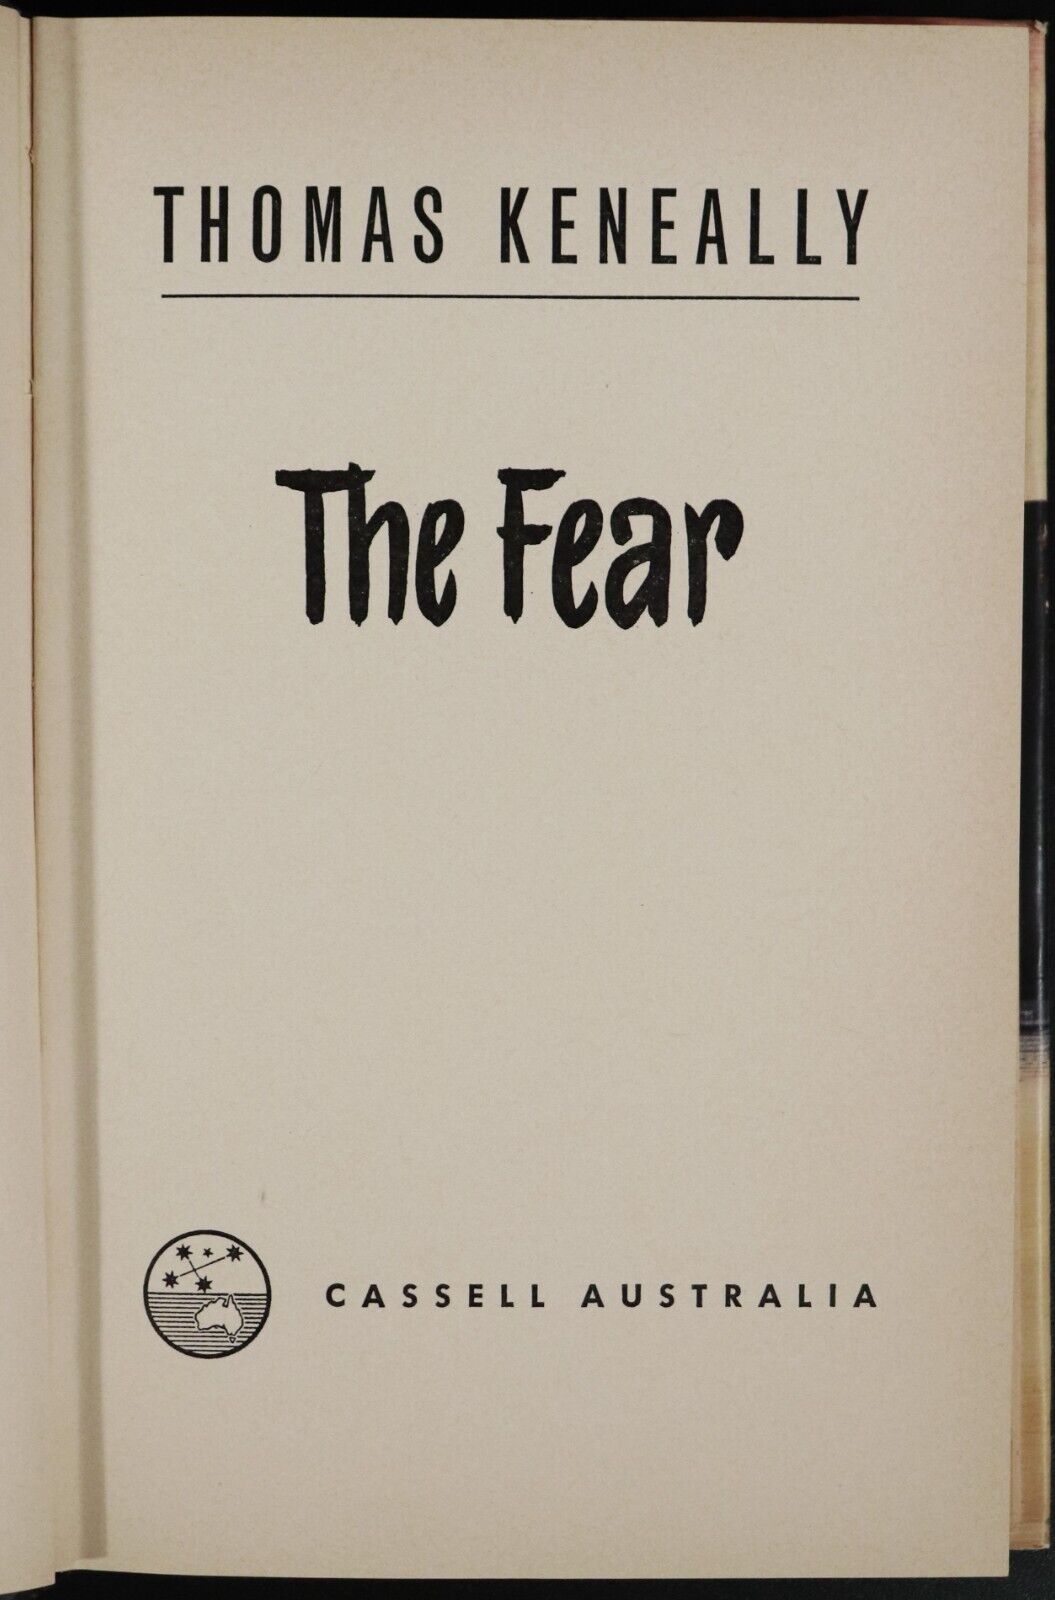 1965 The Fear by Thomas Keneally 1st Edition Australian Fiction Book - 0